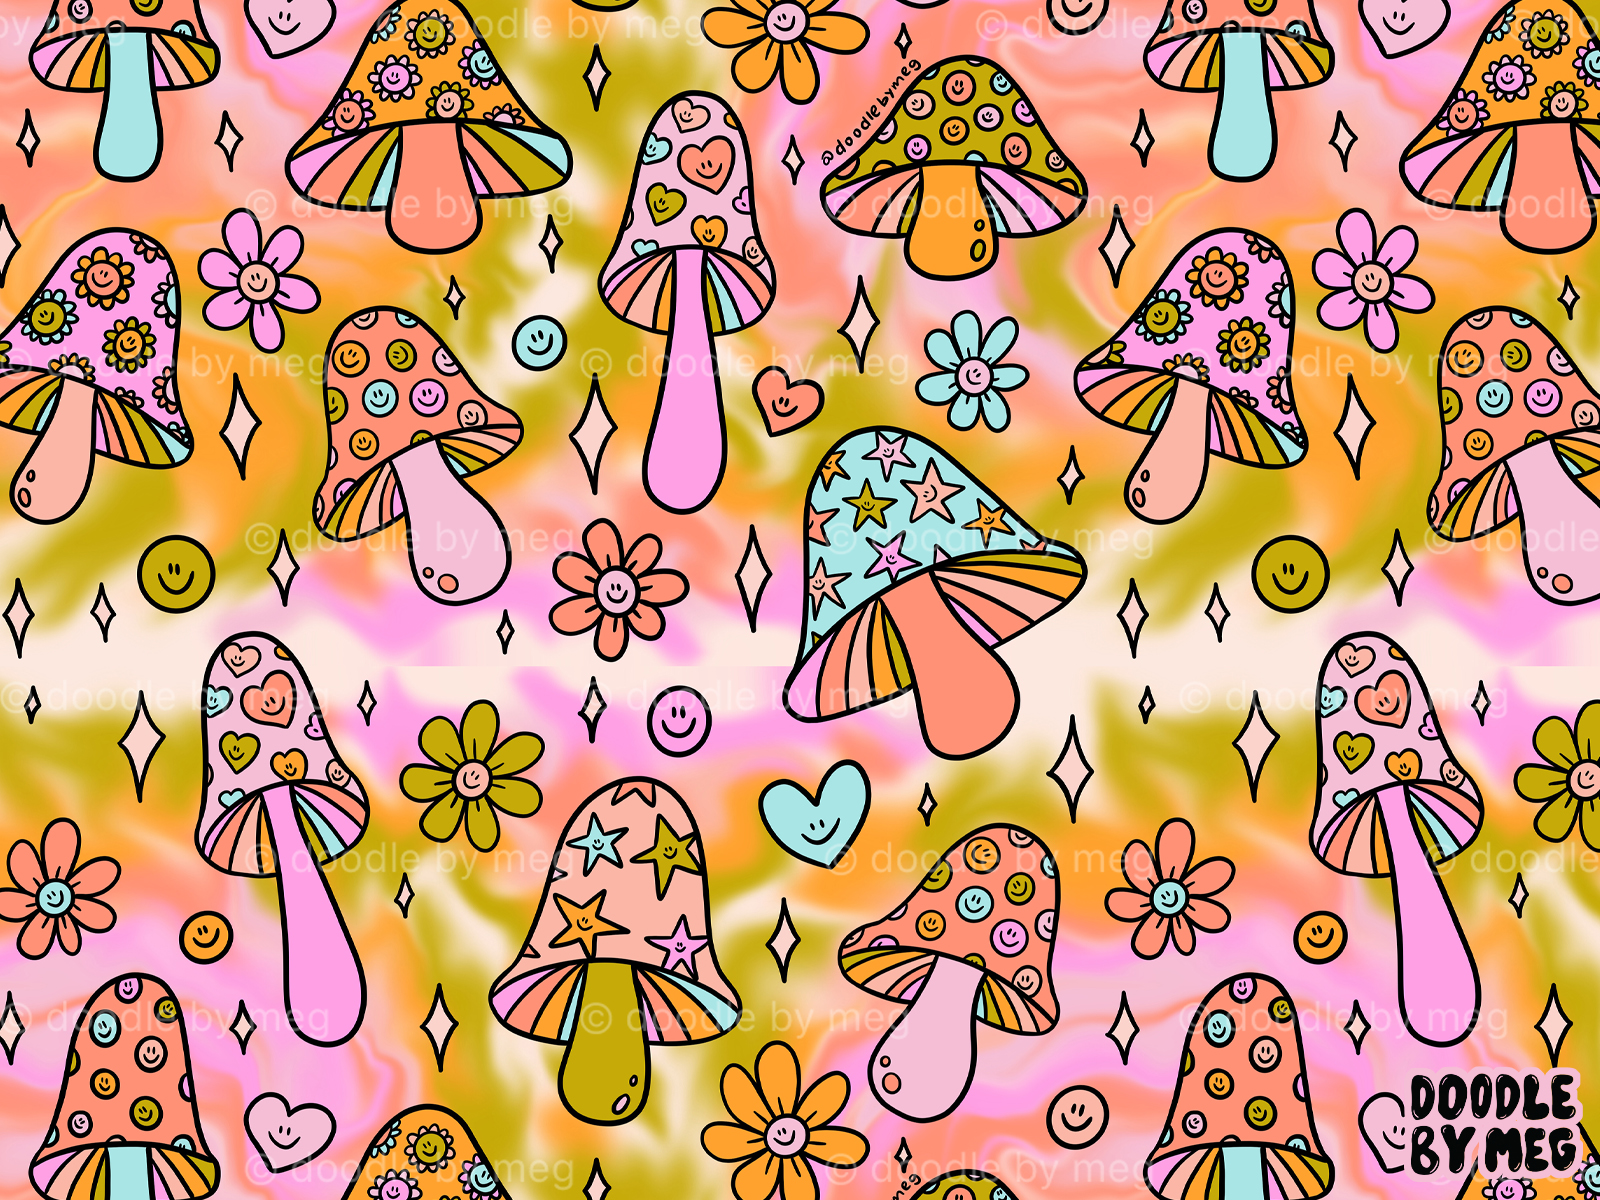 Tie Dye Flower Print Wall Tapestry by Doodle by Meg